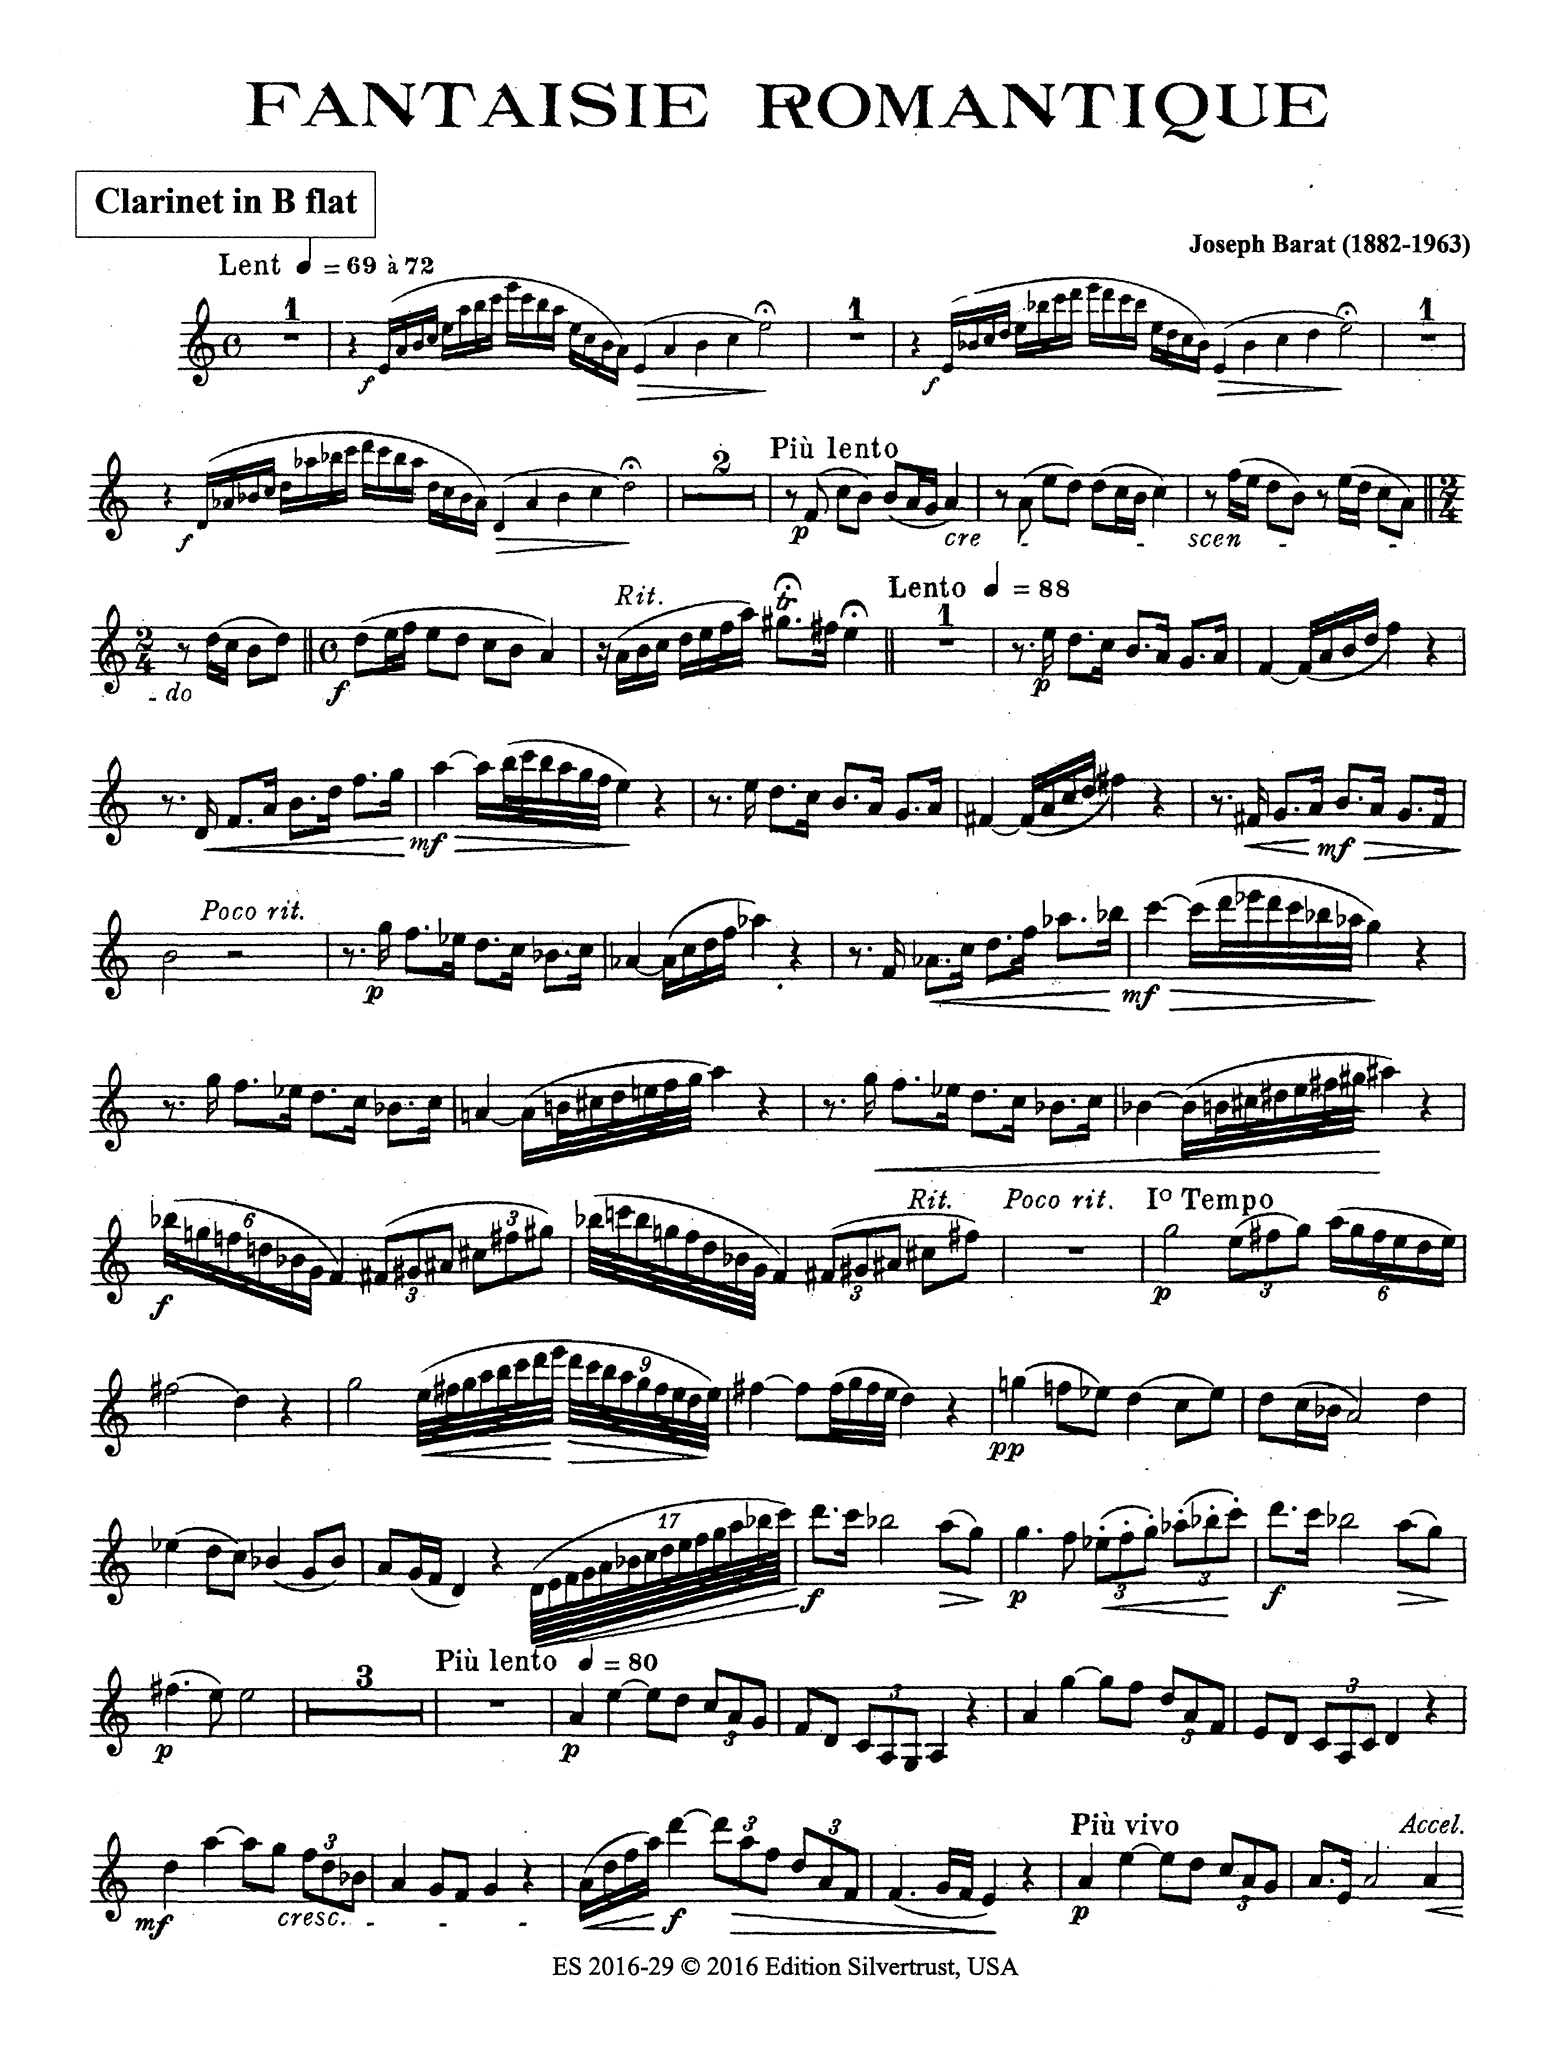 Barat Fantaisie romantique for clarinet & piano solo part